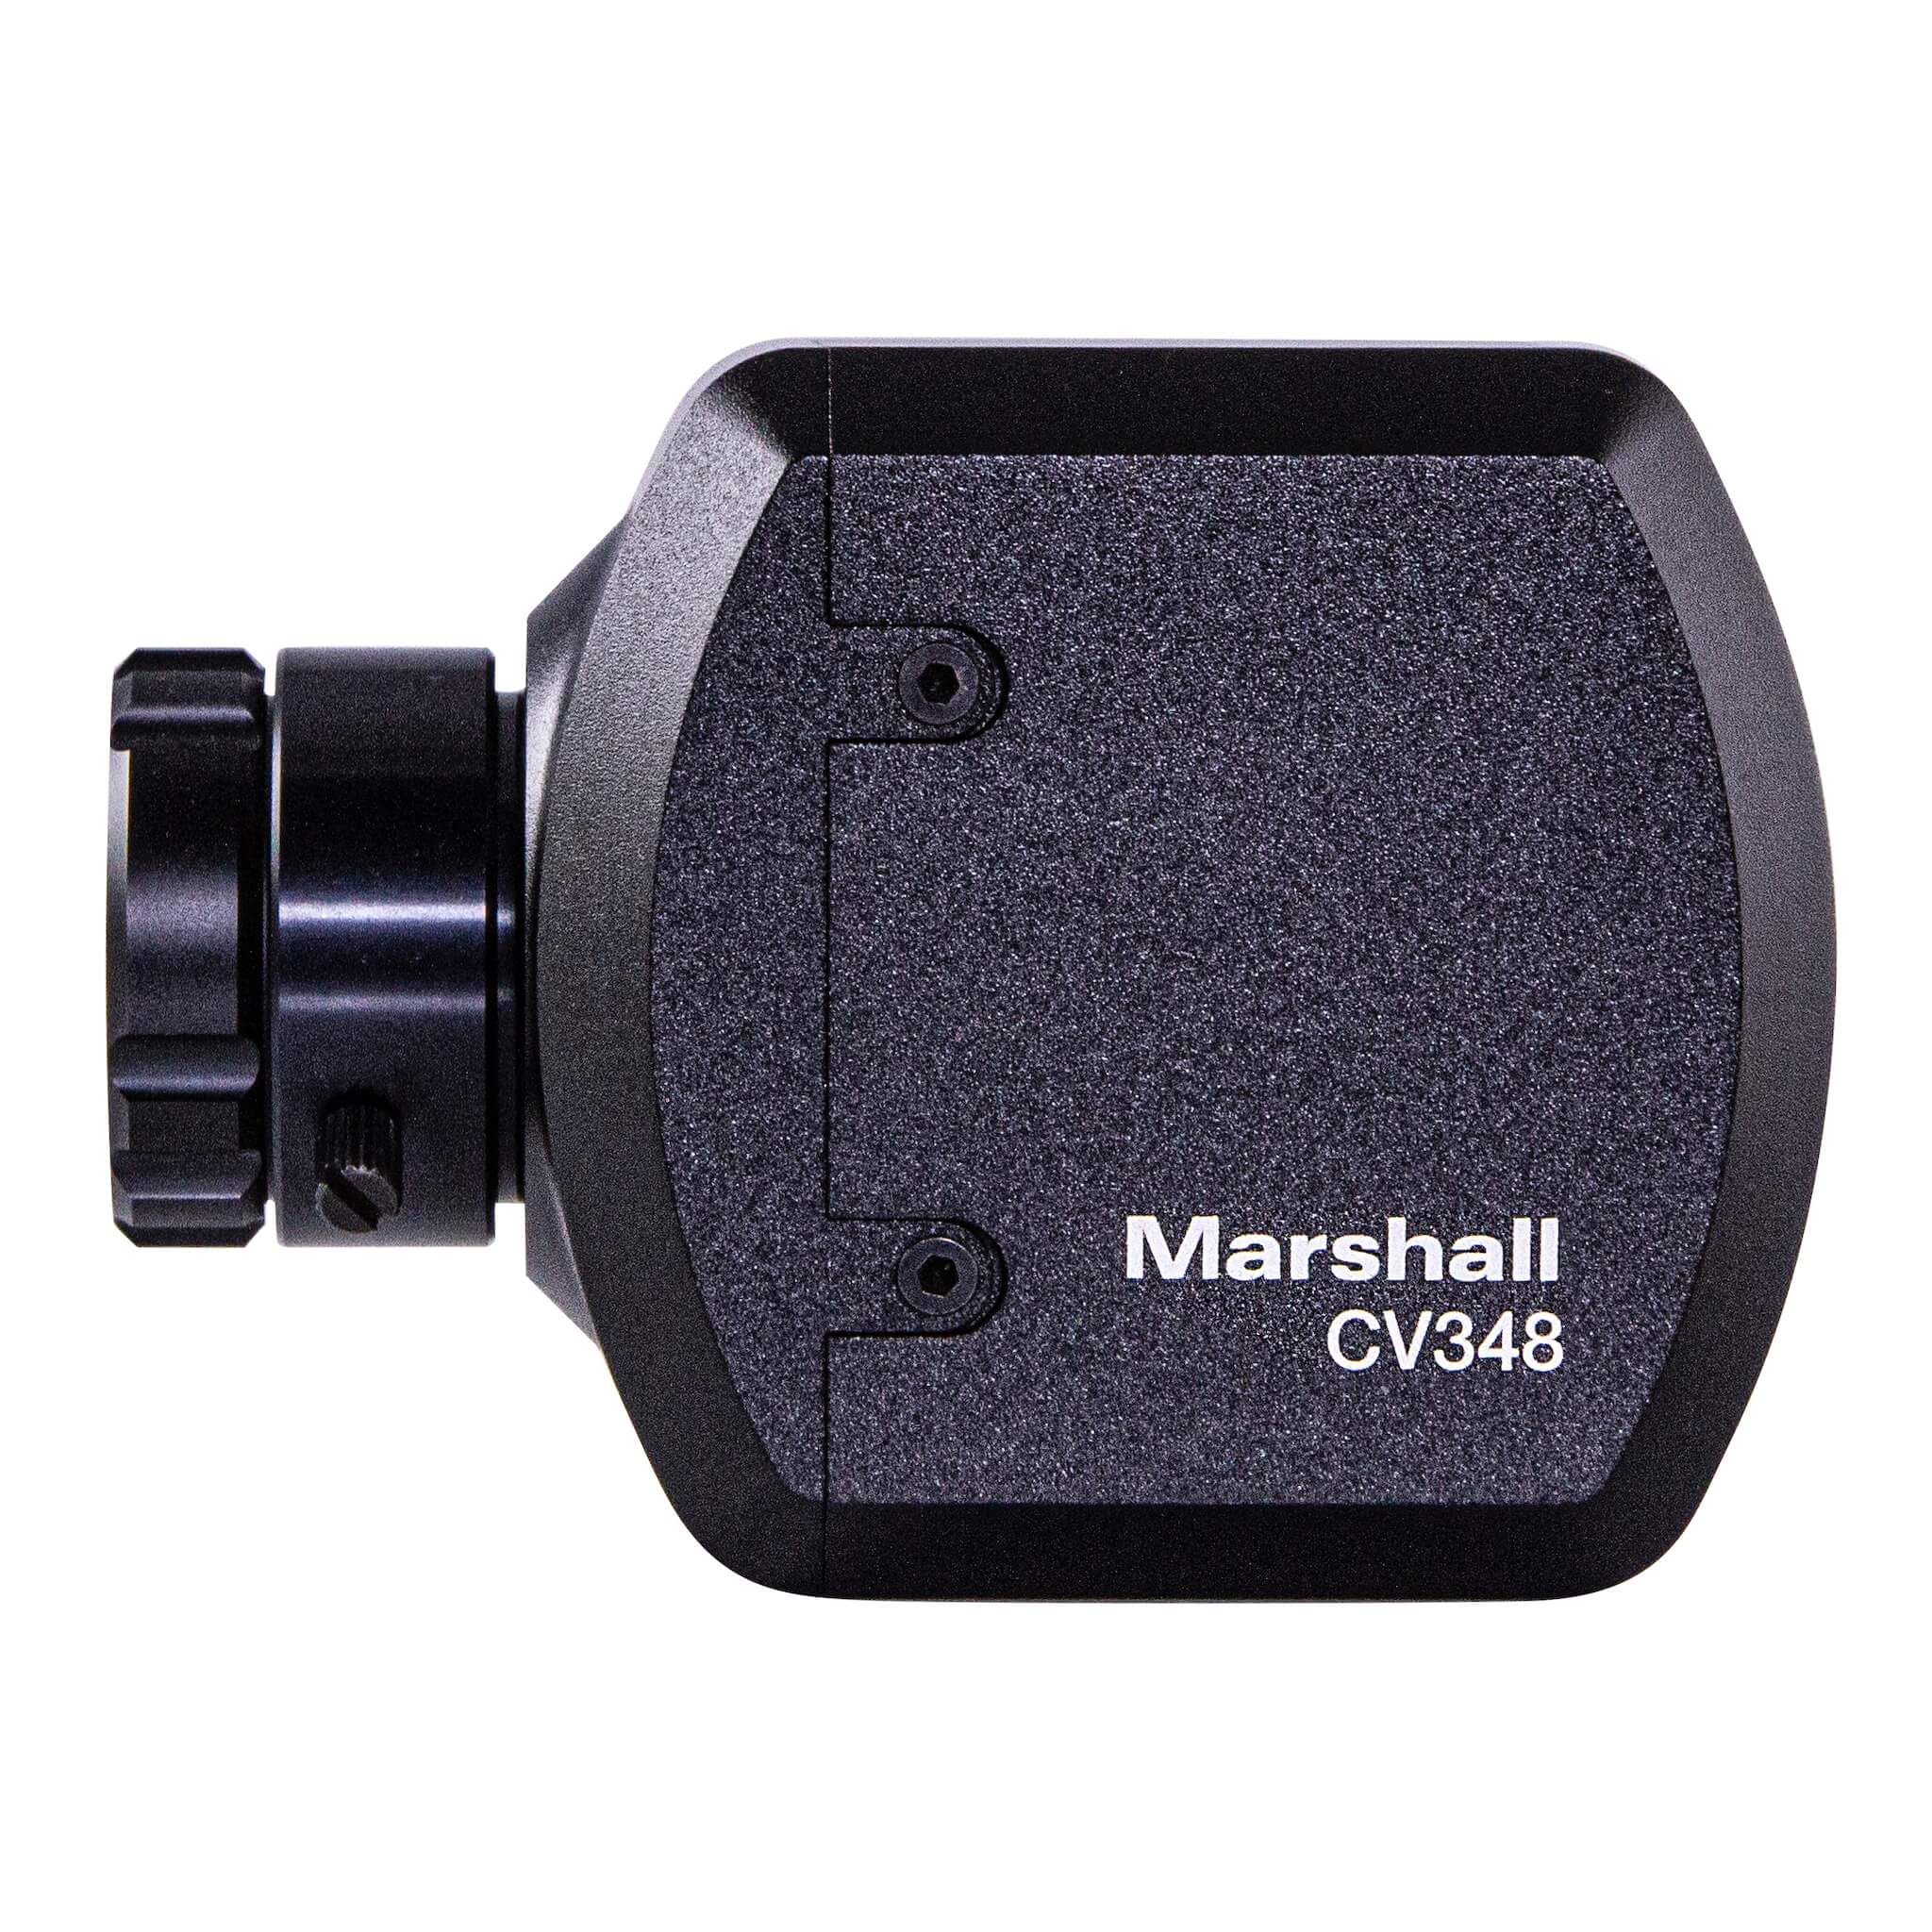 Marshall CV348 - Compact POV Camera 3G/HD-SDI, left side